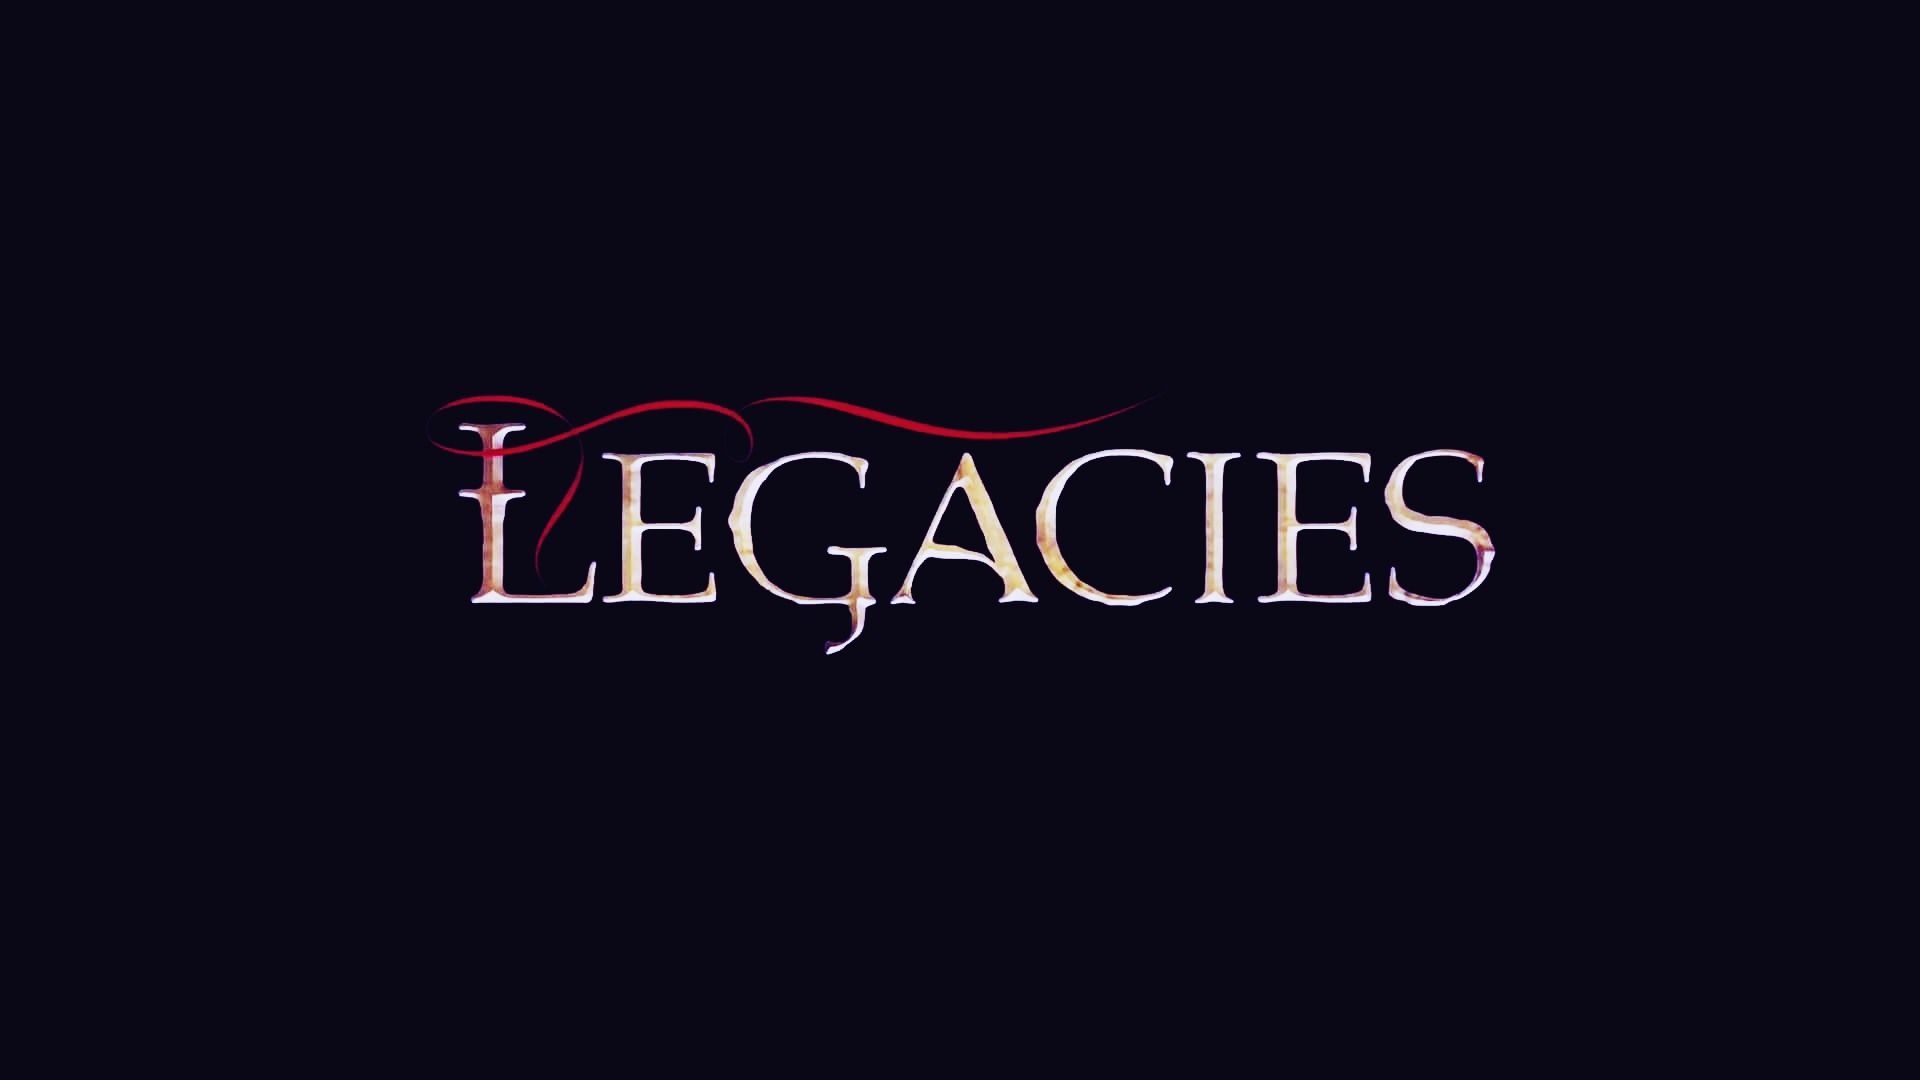 Legacies TV series, High-quality wallpapers, Mystic Falls Academy, Epic battles, 1920x1080 Full HD Desktop